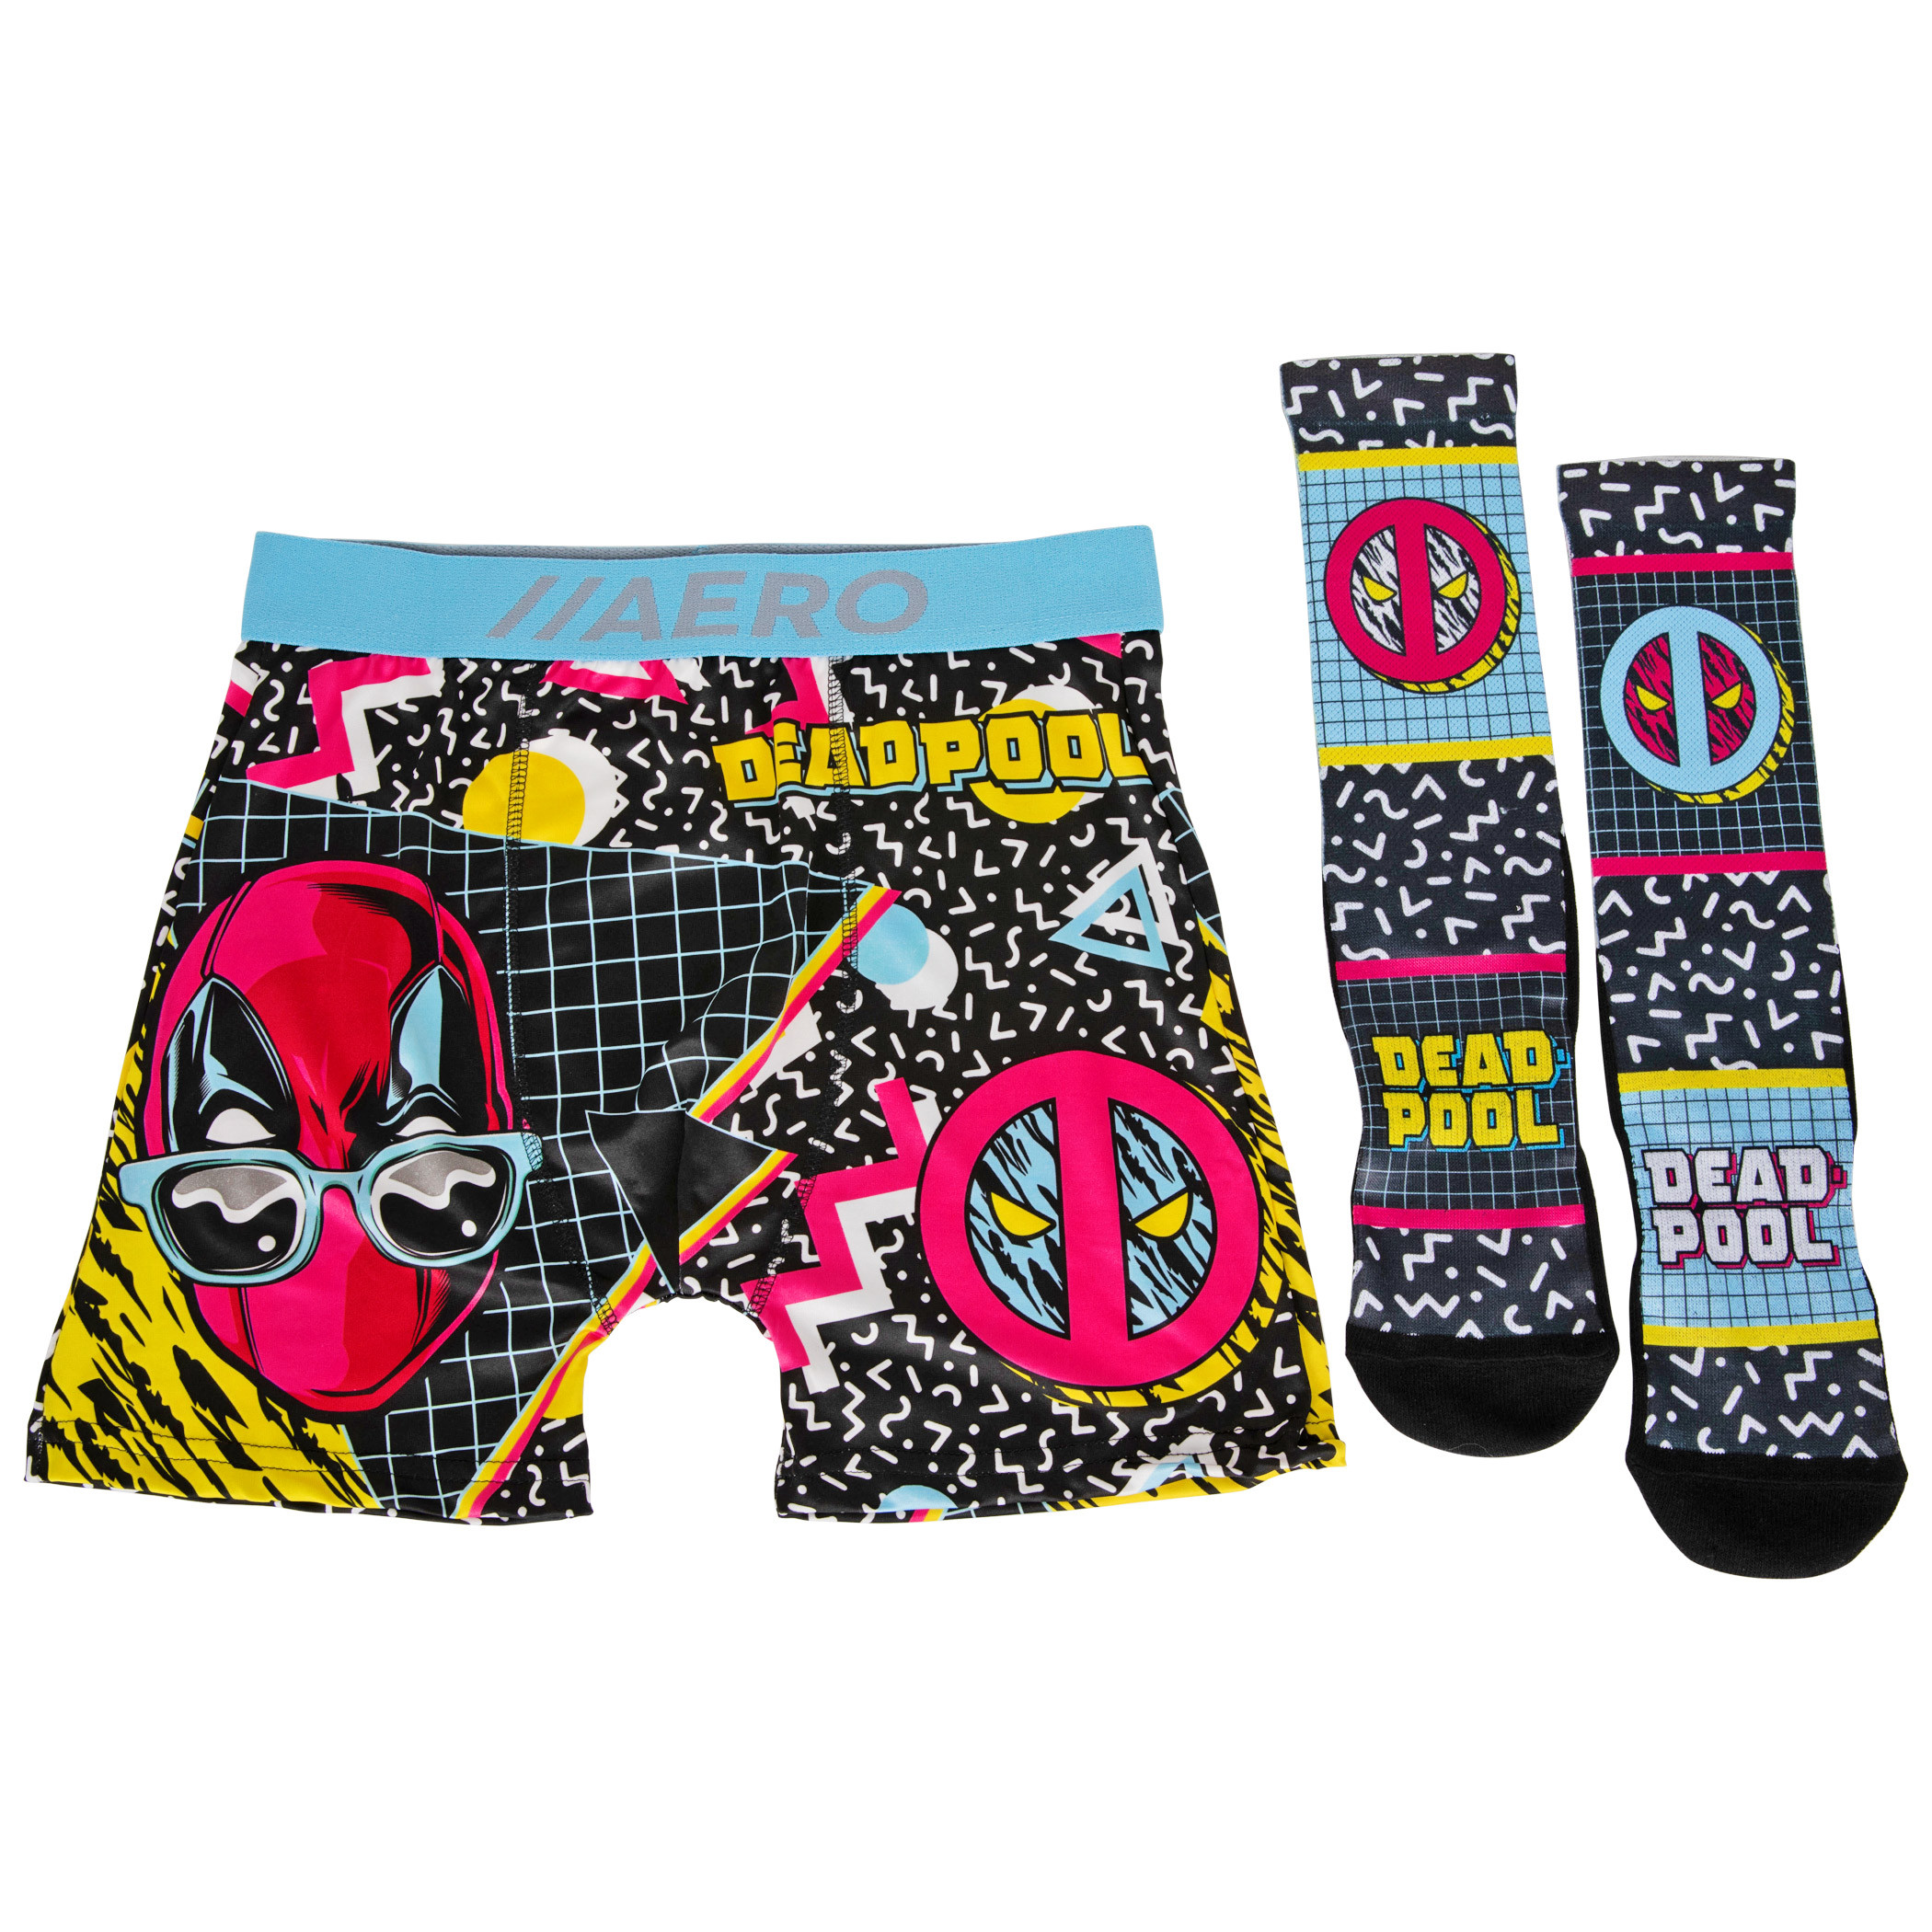 Deadpool Neon Boxer Briefs Underwear and Sock Set